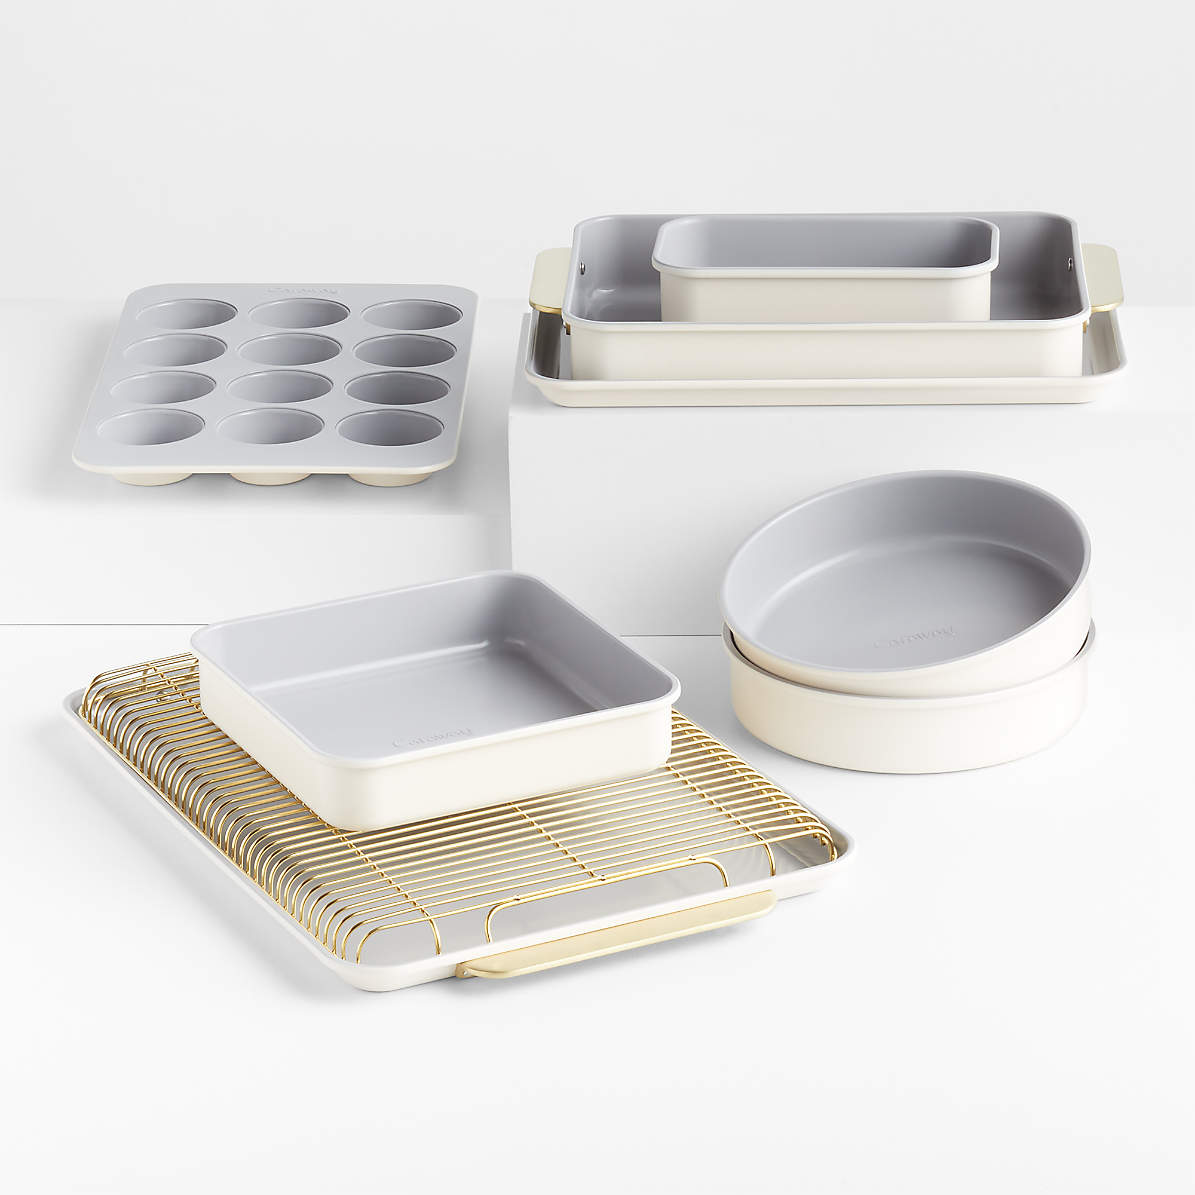 Caraway 11-Piece Nontoxic Ceramic Bakeware Set Sage